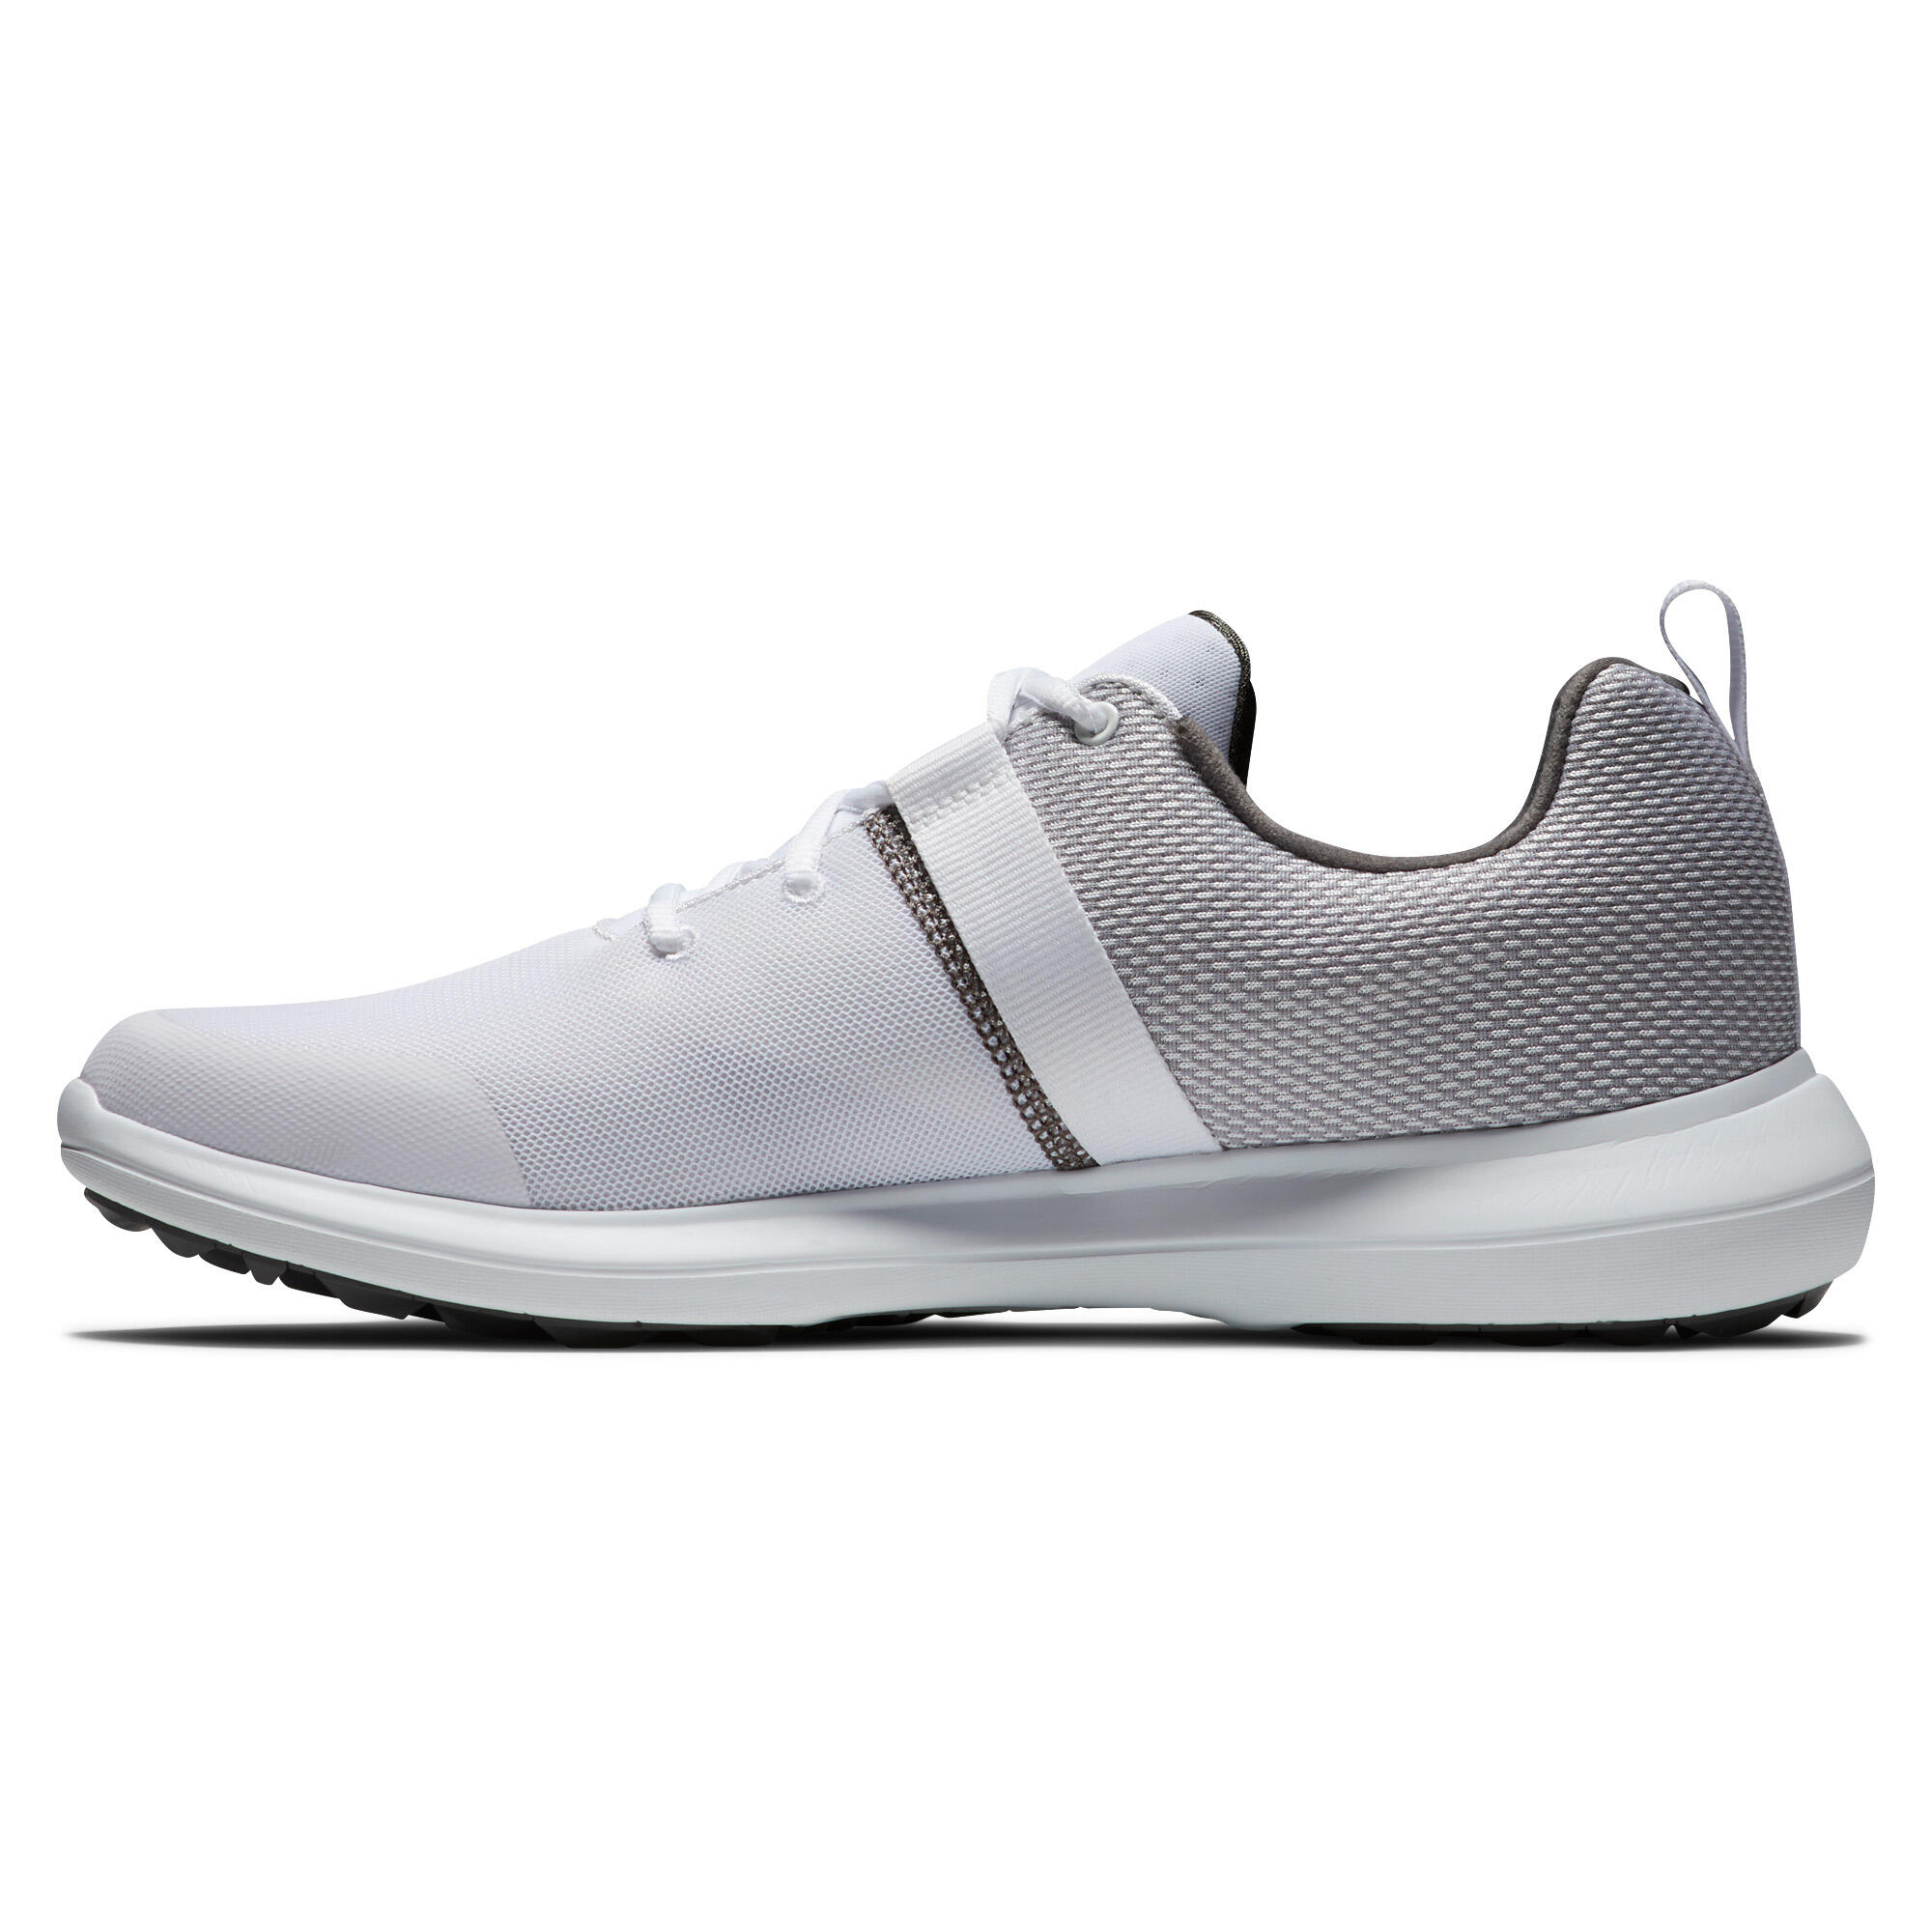 Men’s golf shoes FJ Flex - white and grey 3/6